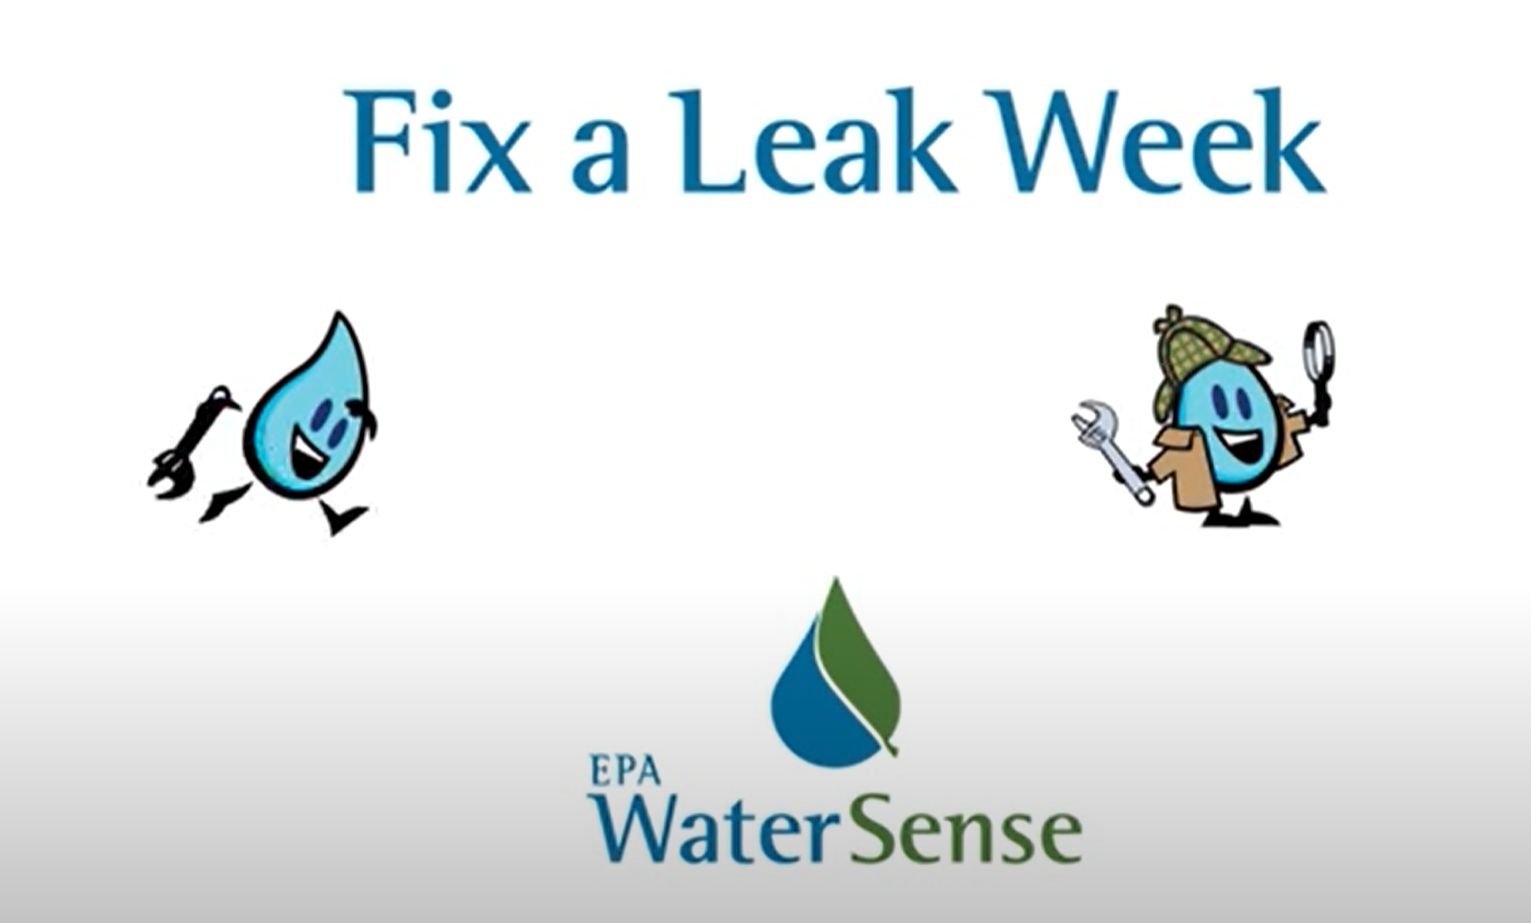 Fix a Leak Week Image